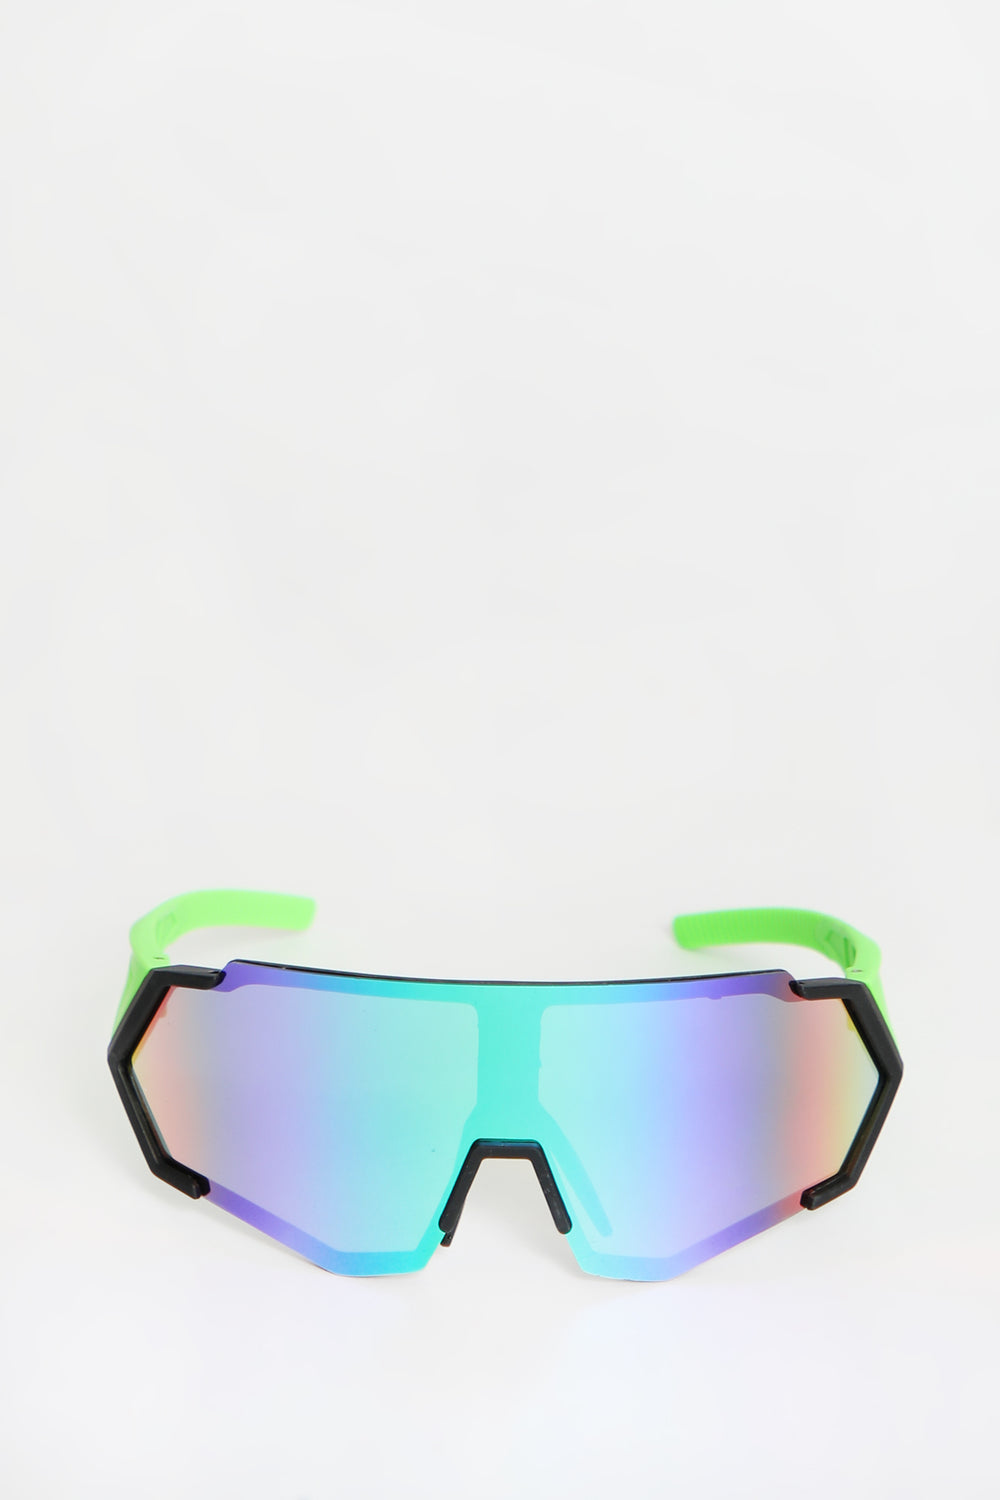 West49 Neon Shield Sunglasses West49 Neon Shield Sunglasses